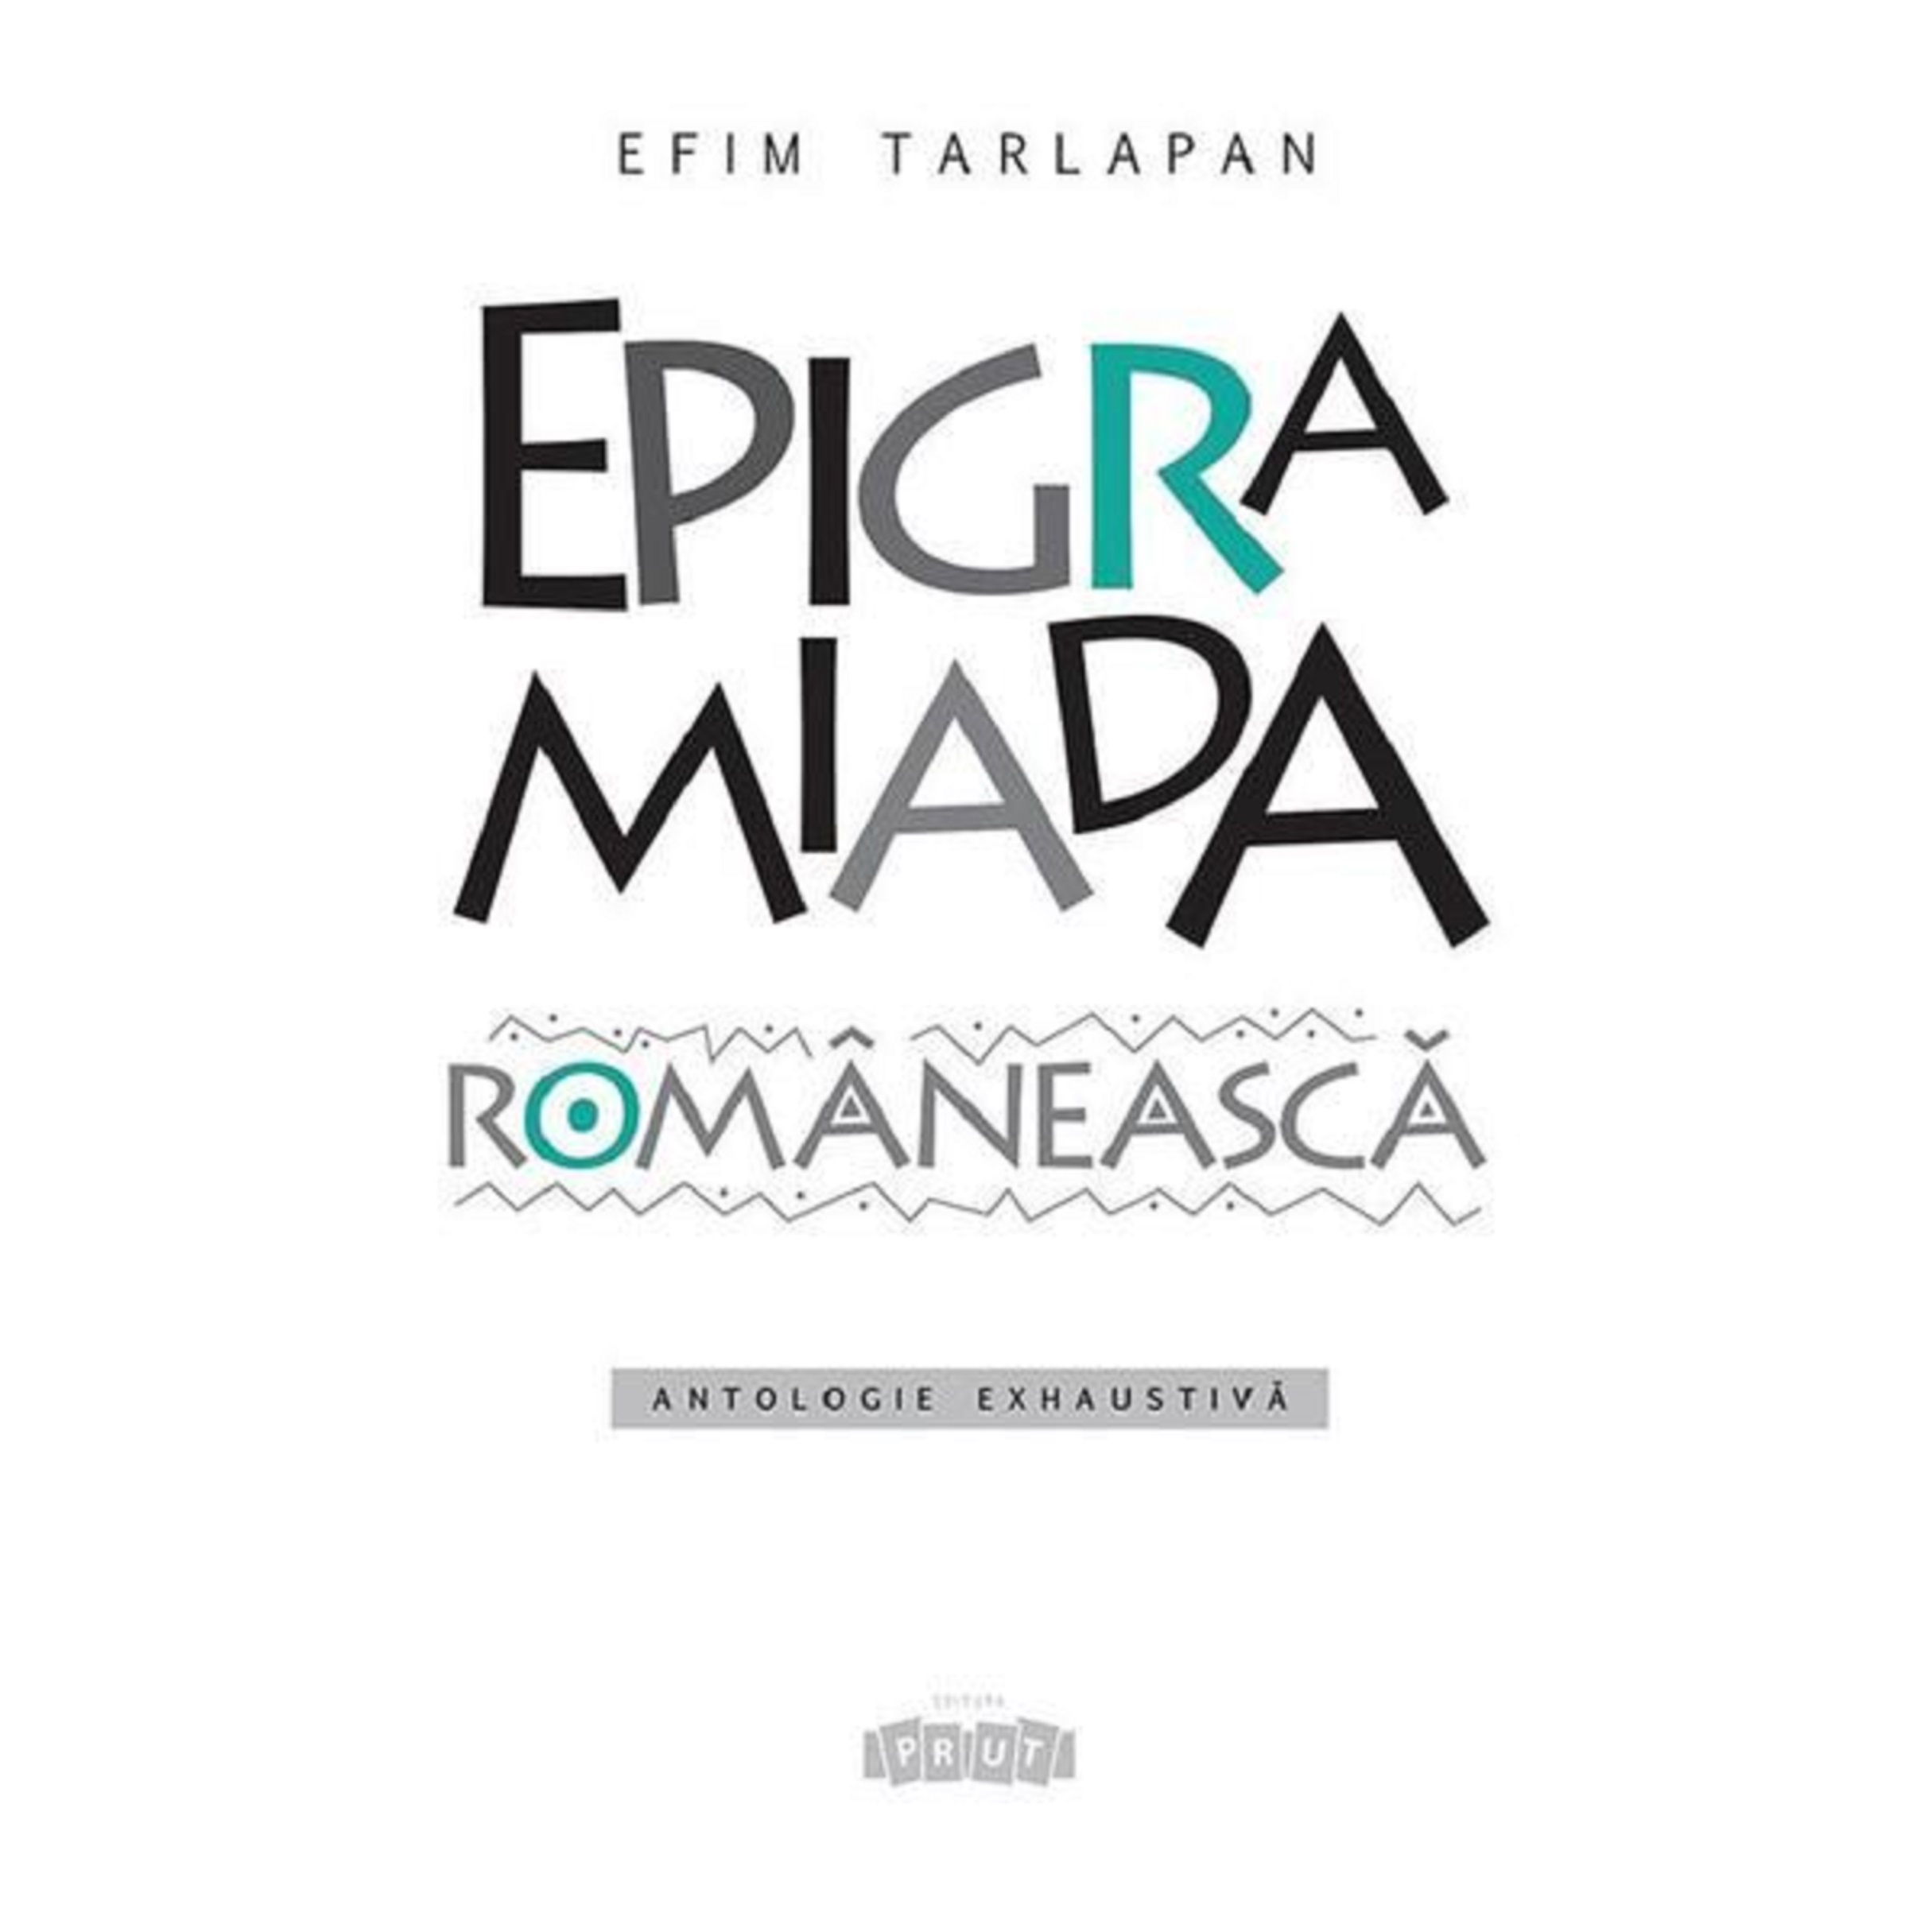 Epigramiada romaneasca | Efim Tarlapan carturesti.ro